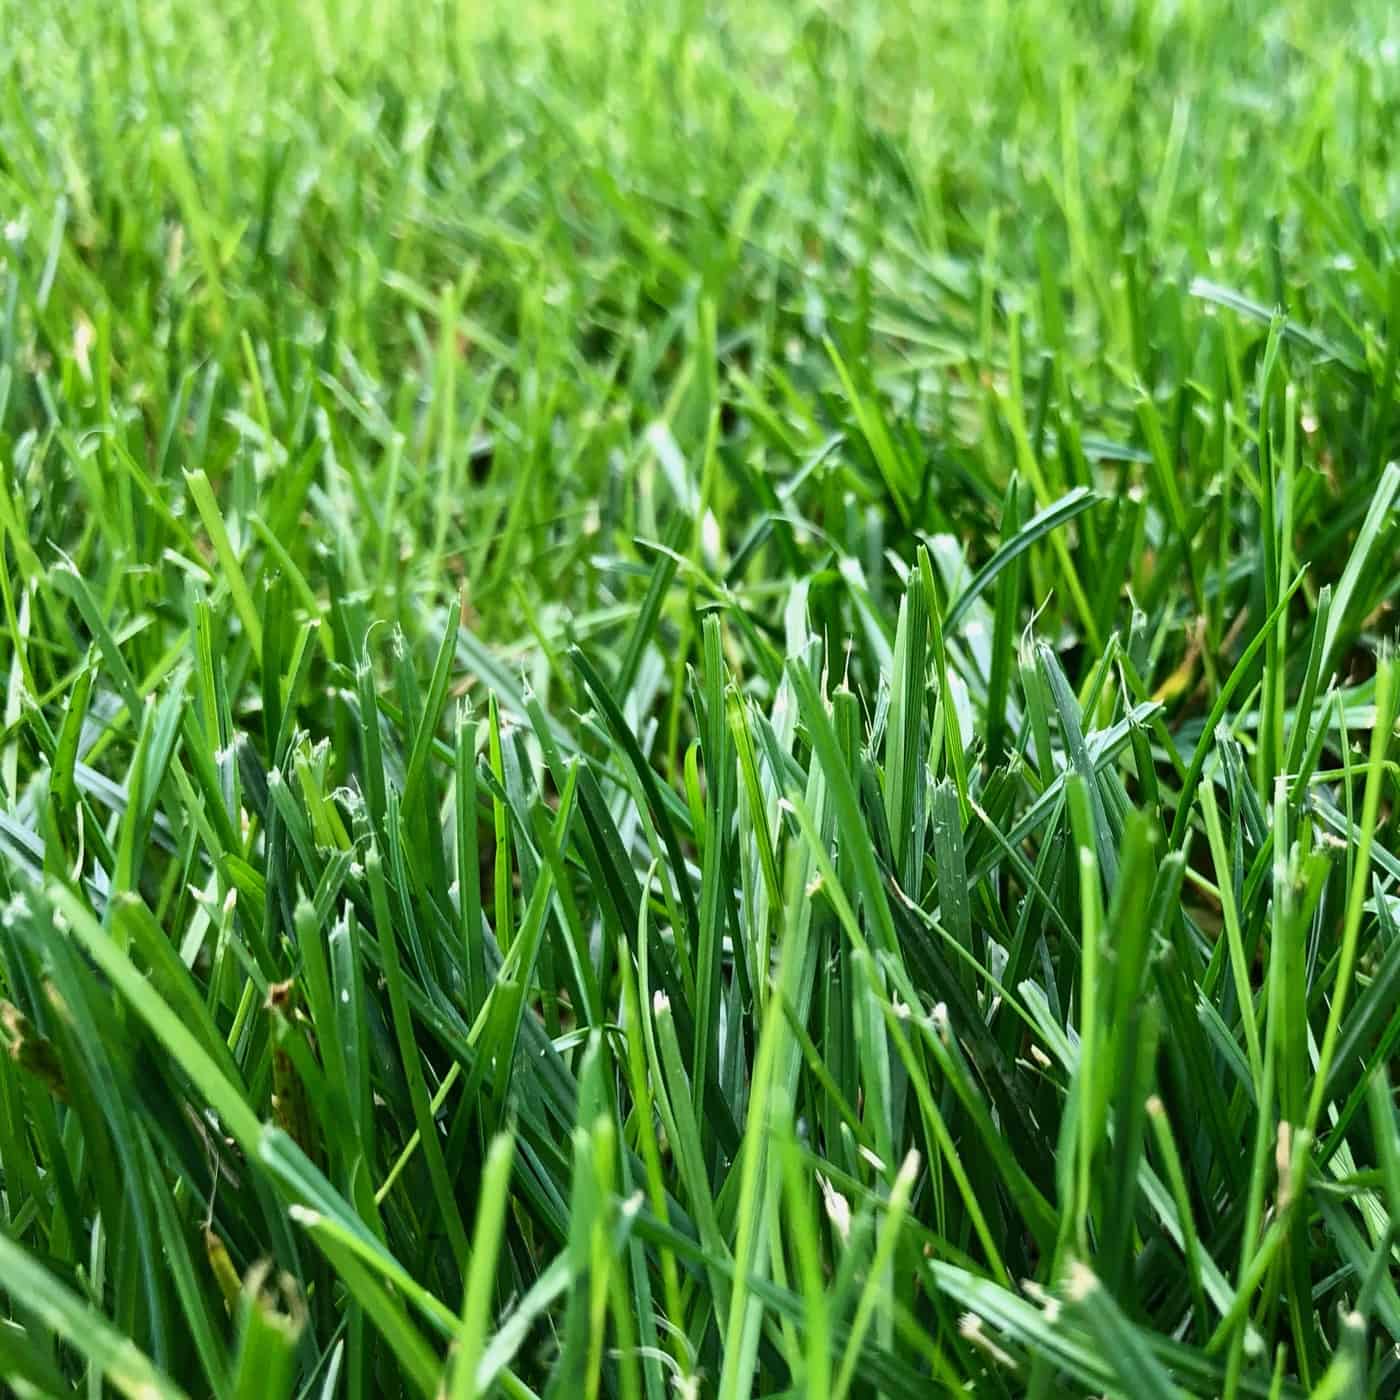 Turf grass sod lawn - established - after installation